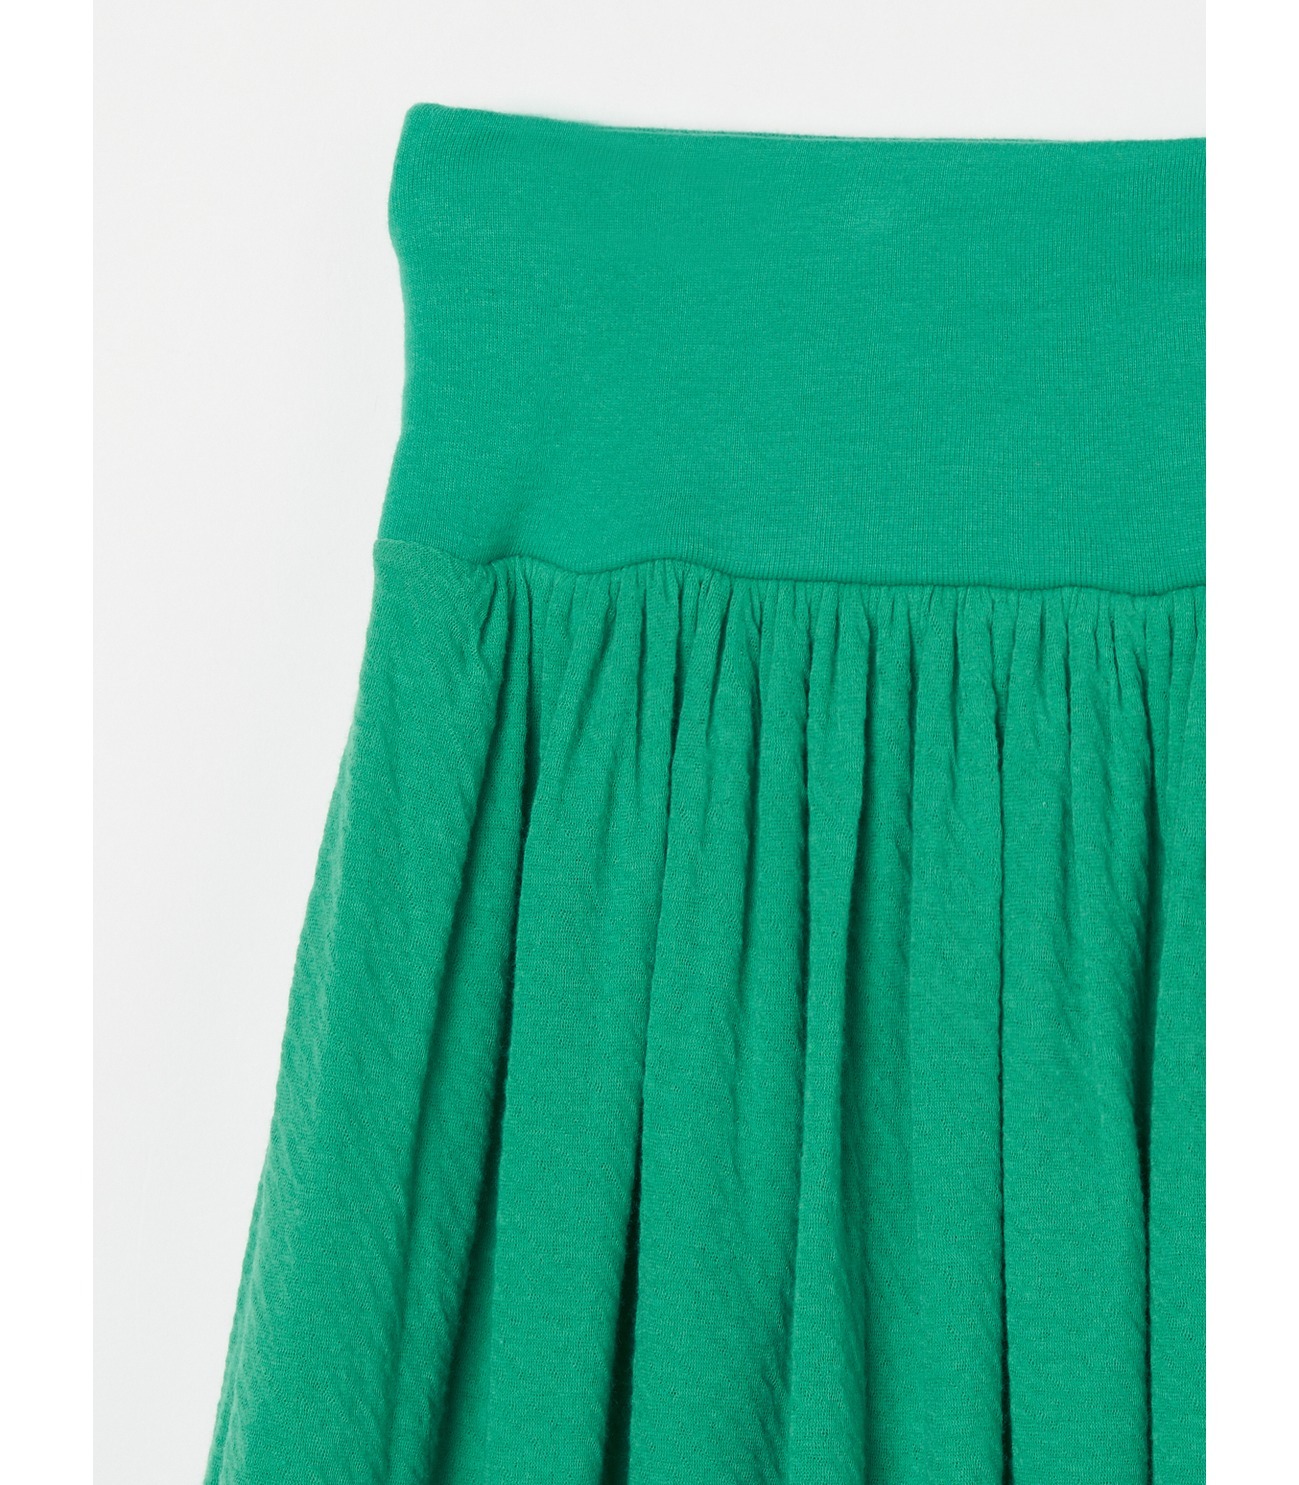 Weekend dress crepe gauze skirt 詳細画像 green 3